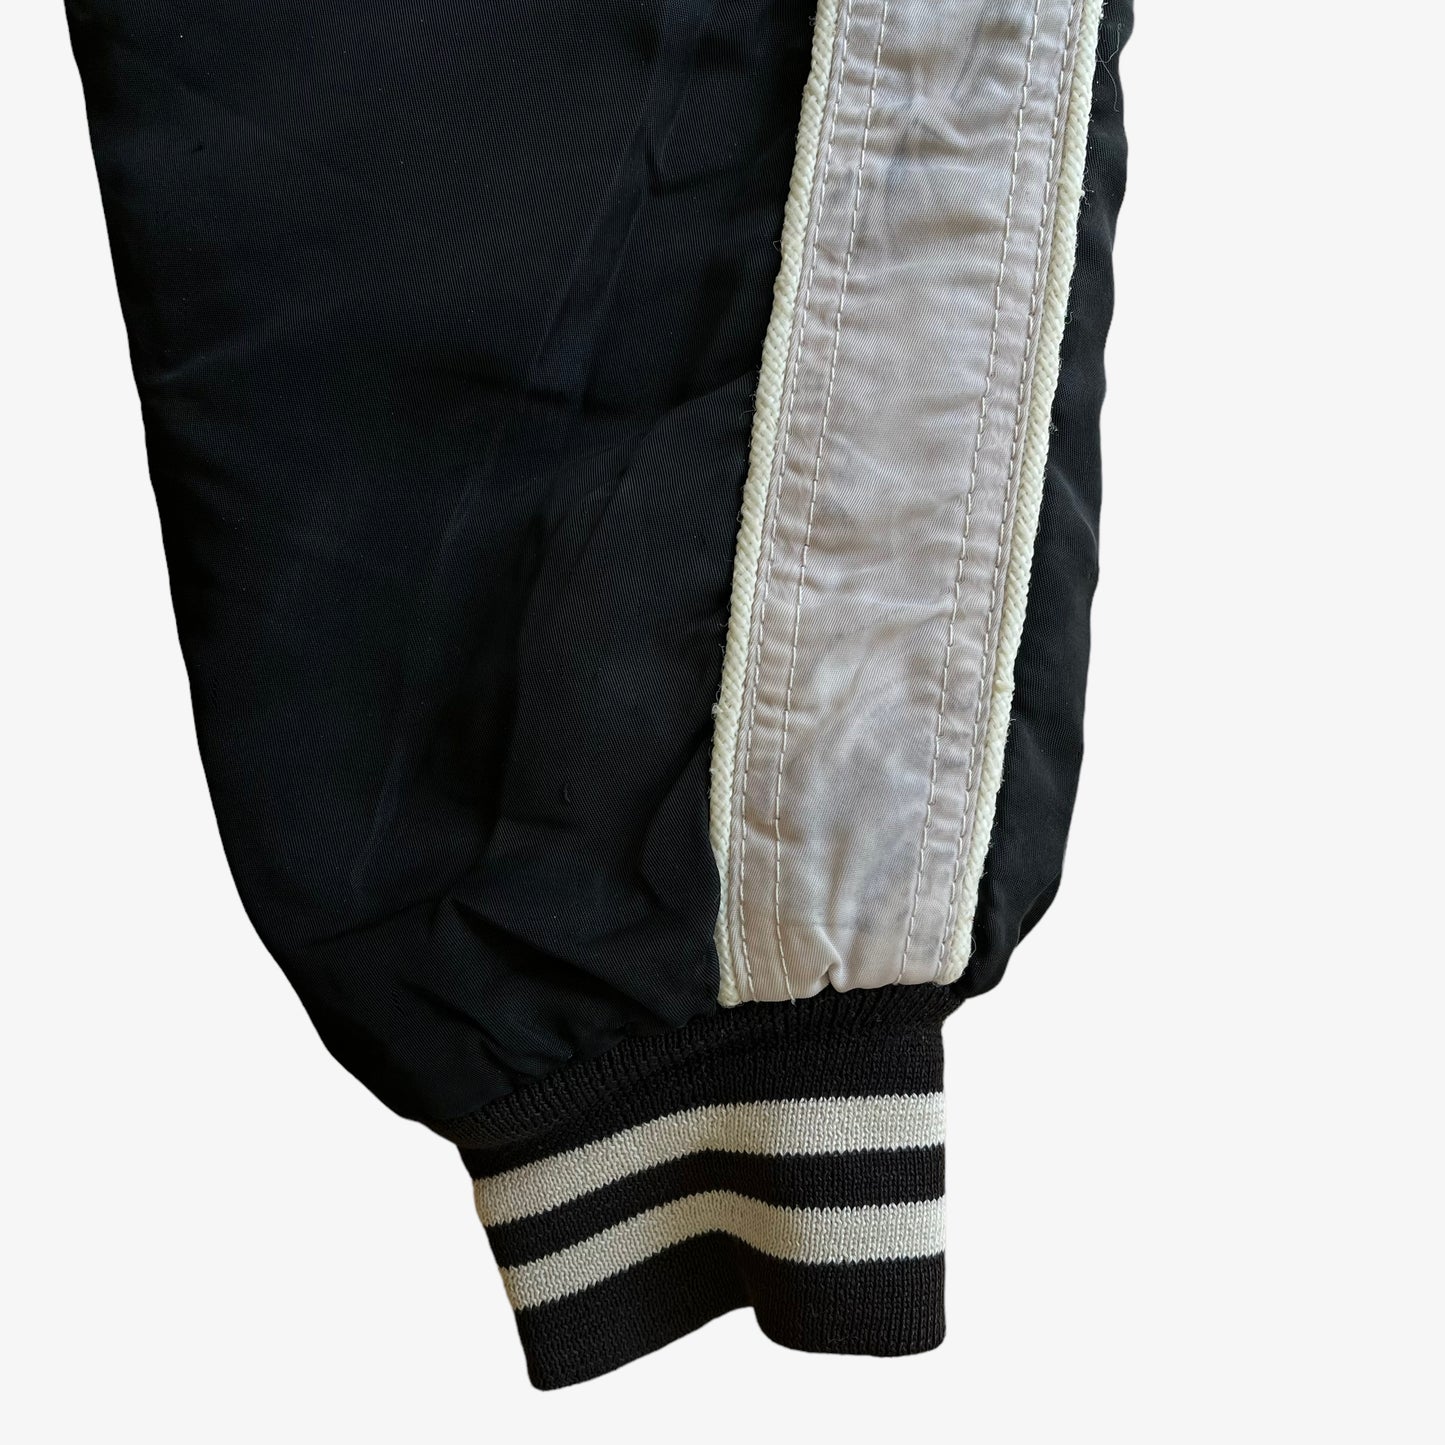 Vintage Y2K Replay Blue Jeans Black Bomber Jacket Cuff - Casspio's Dream